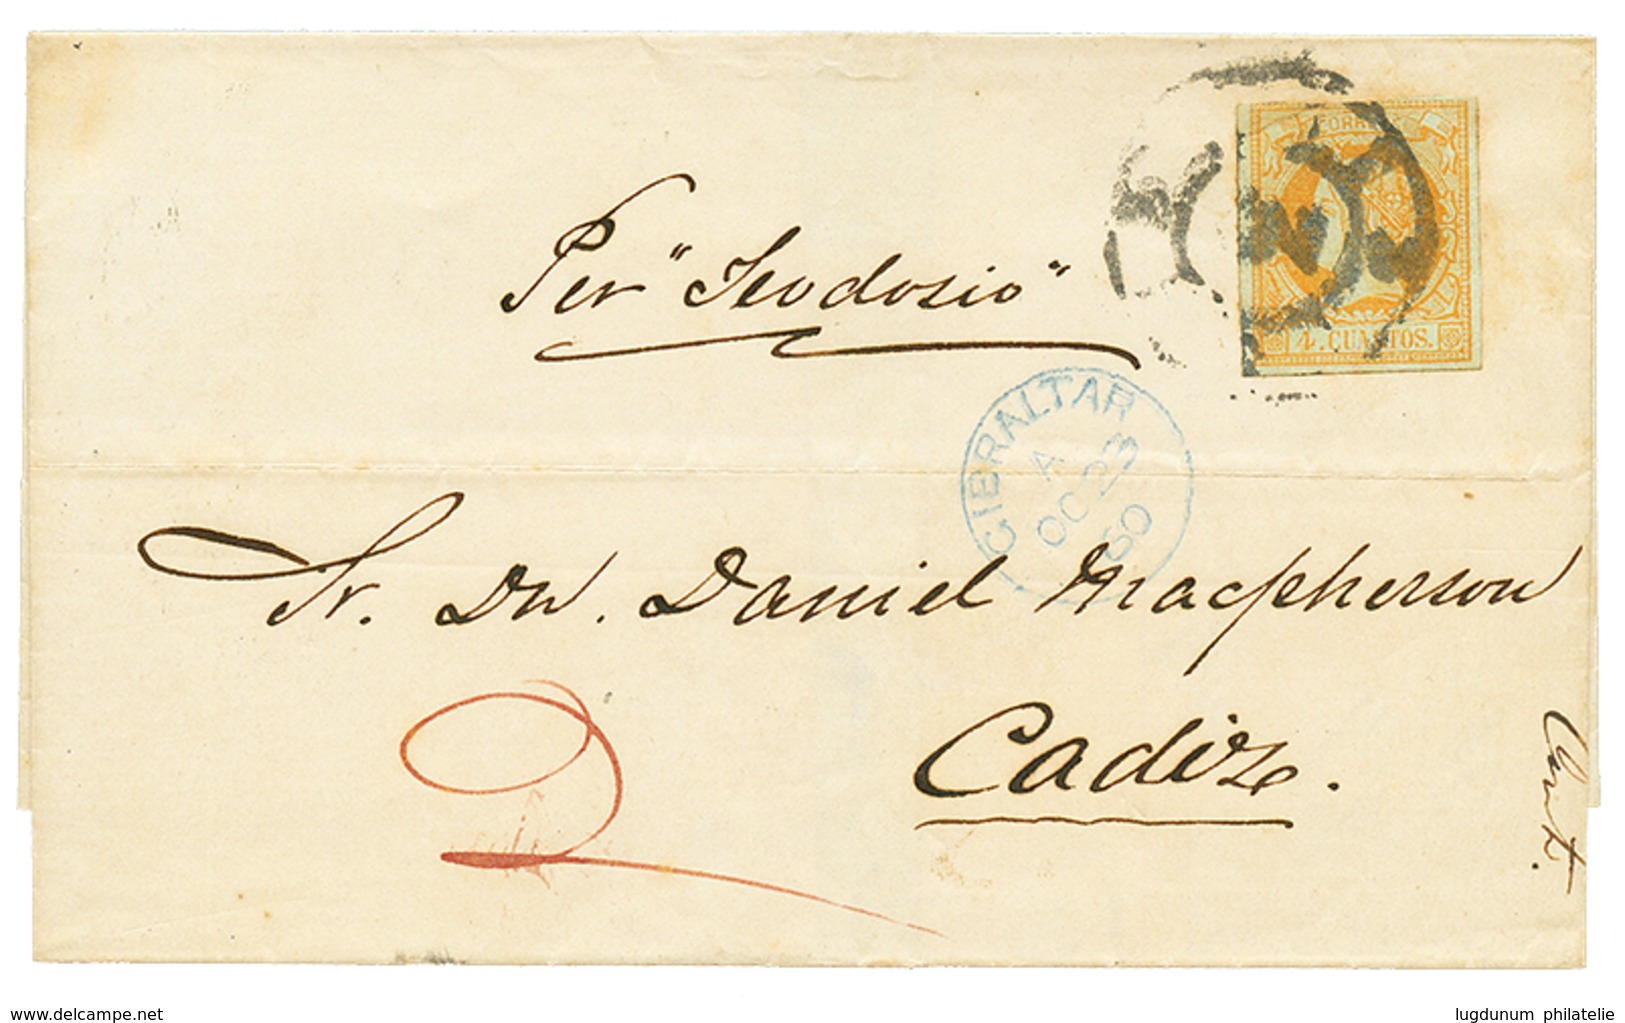 607 1860 SPAIN 4c Canc. 3 + British Cds GIBRALTAR + "2" Tax Marking On Cover From GIBRALTAR To CADIZ. Vvf. - Gibraltar